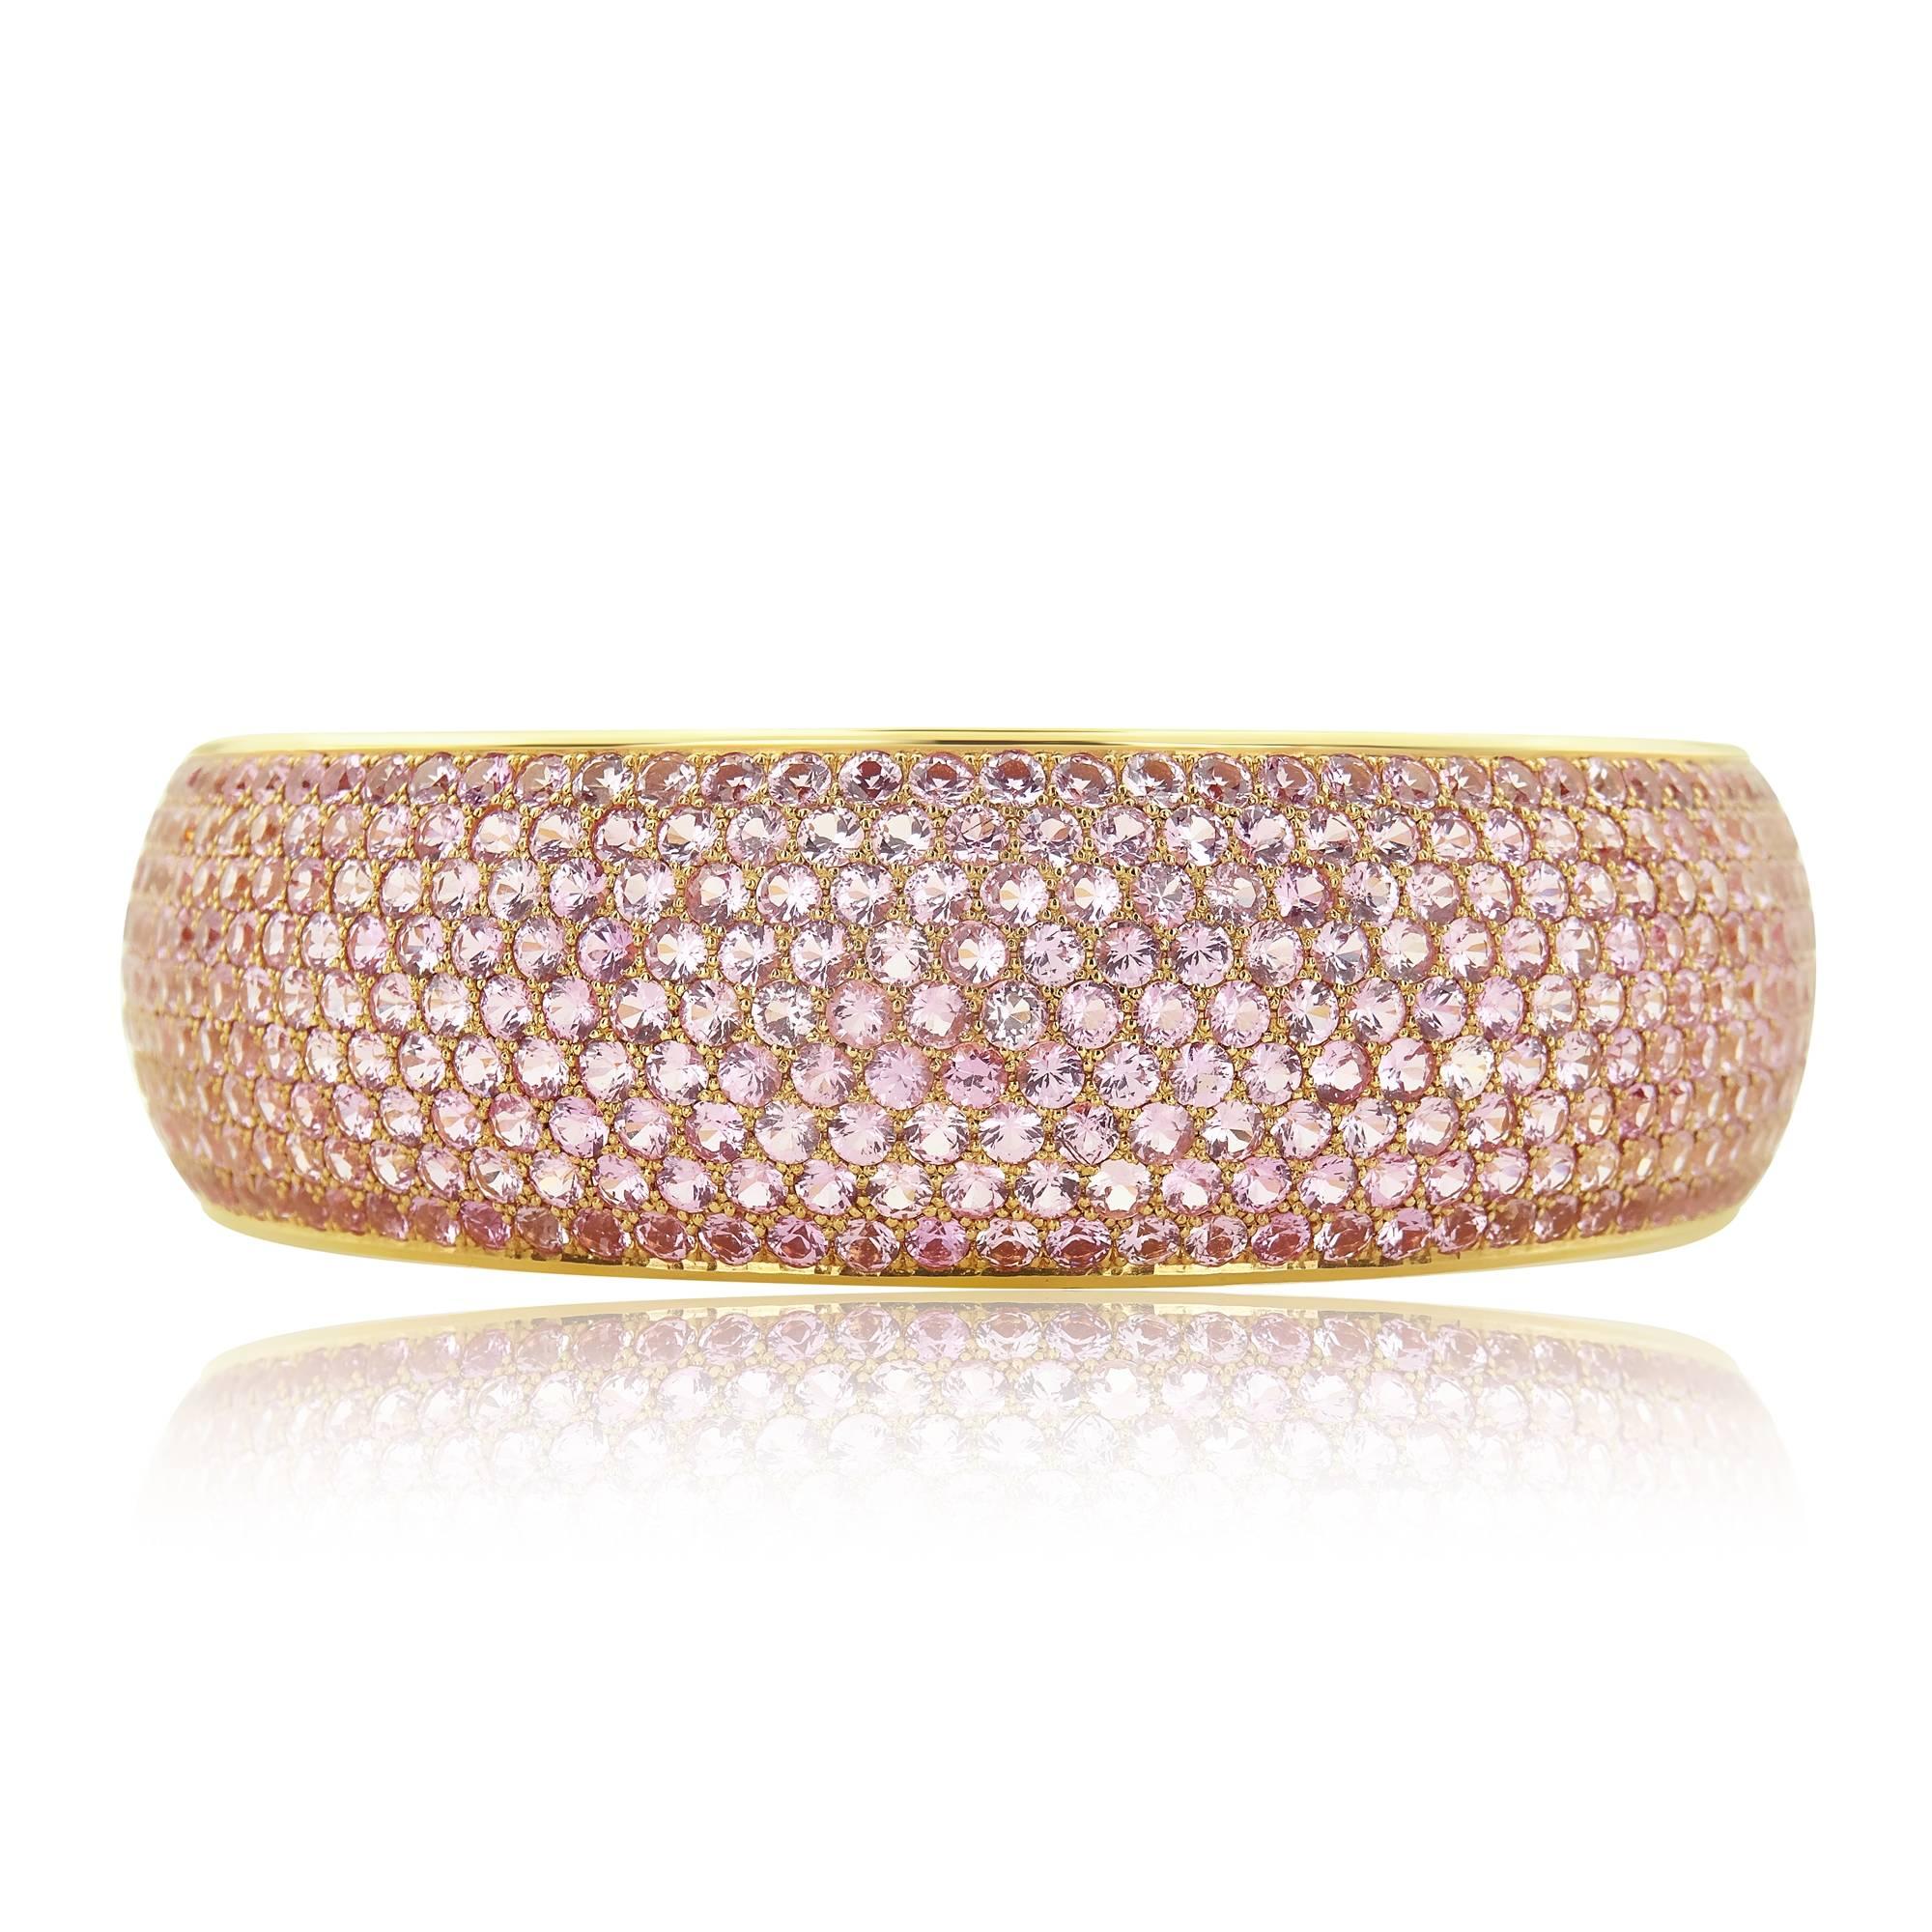 PINK SAPPHIRE BANGLE - 40 CT

Set in 18K Rose Gold


Total pink sapphire weight: 40 ct
[ 780 stones ]

Total bangle weight: 52.91 grams